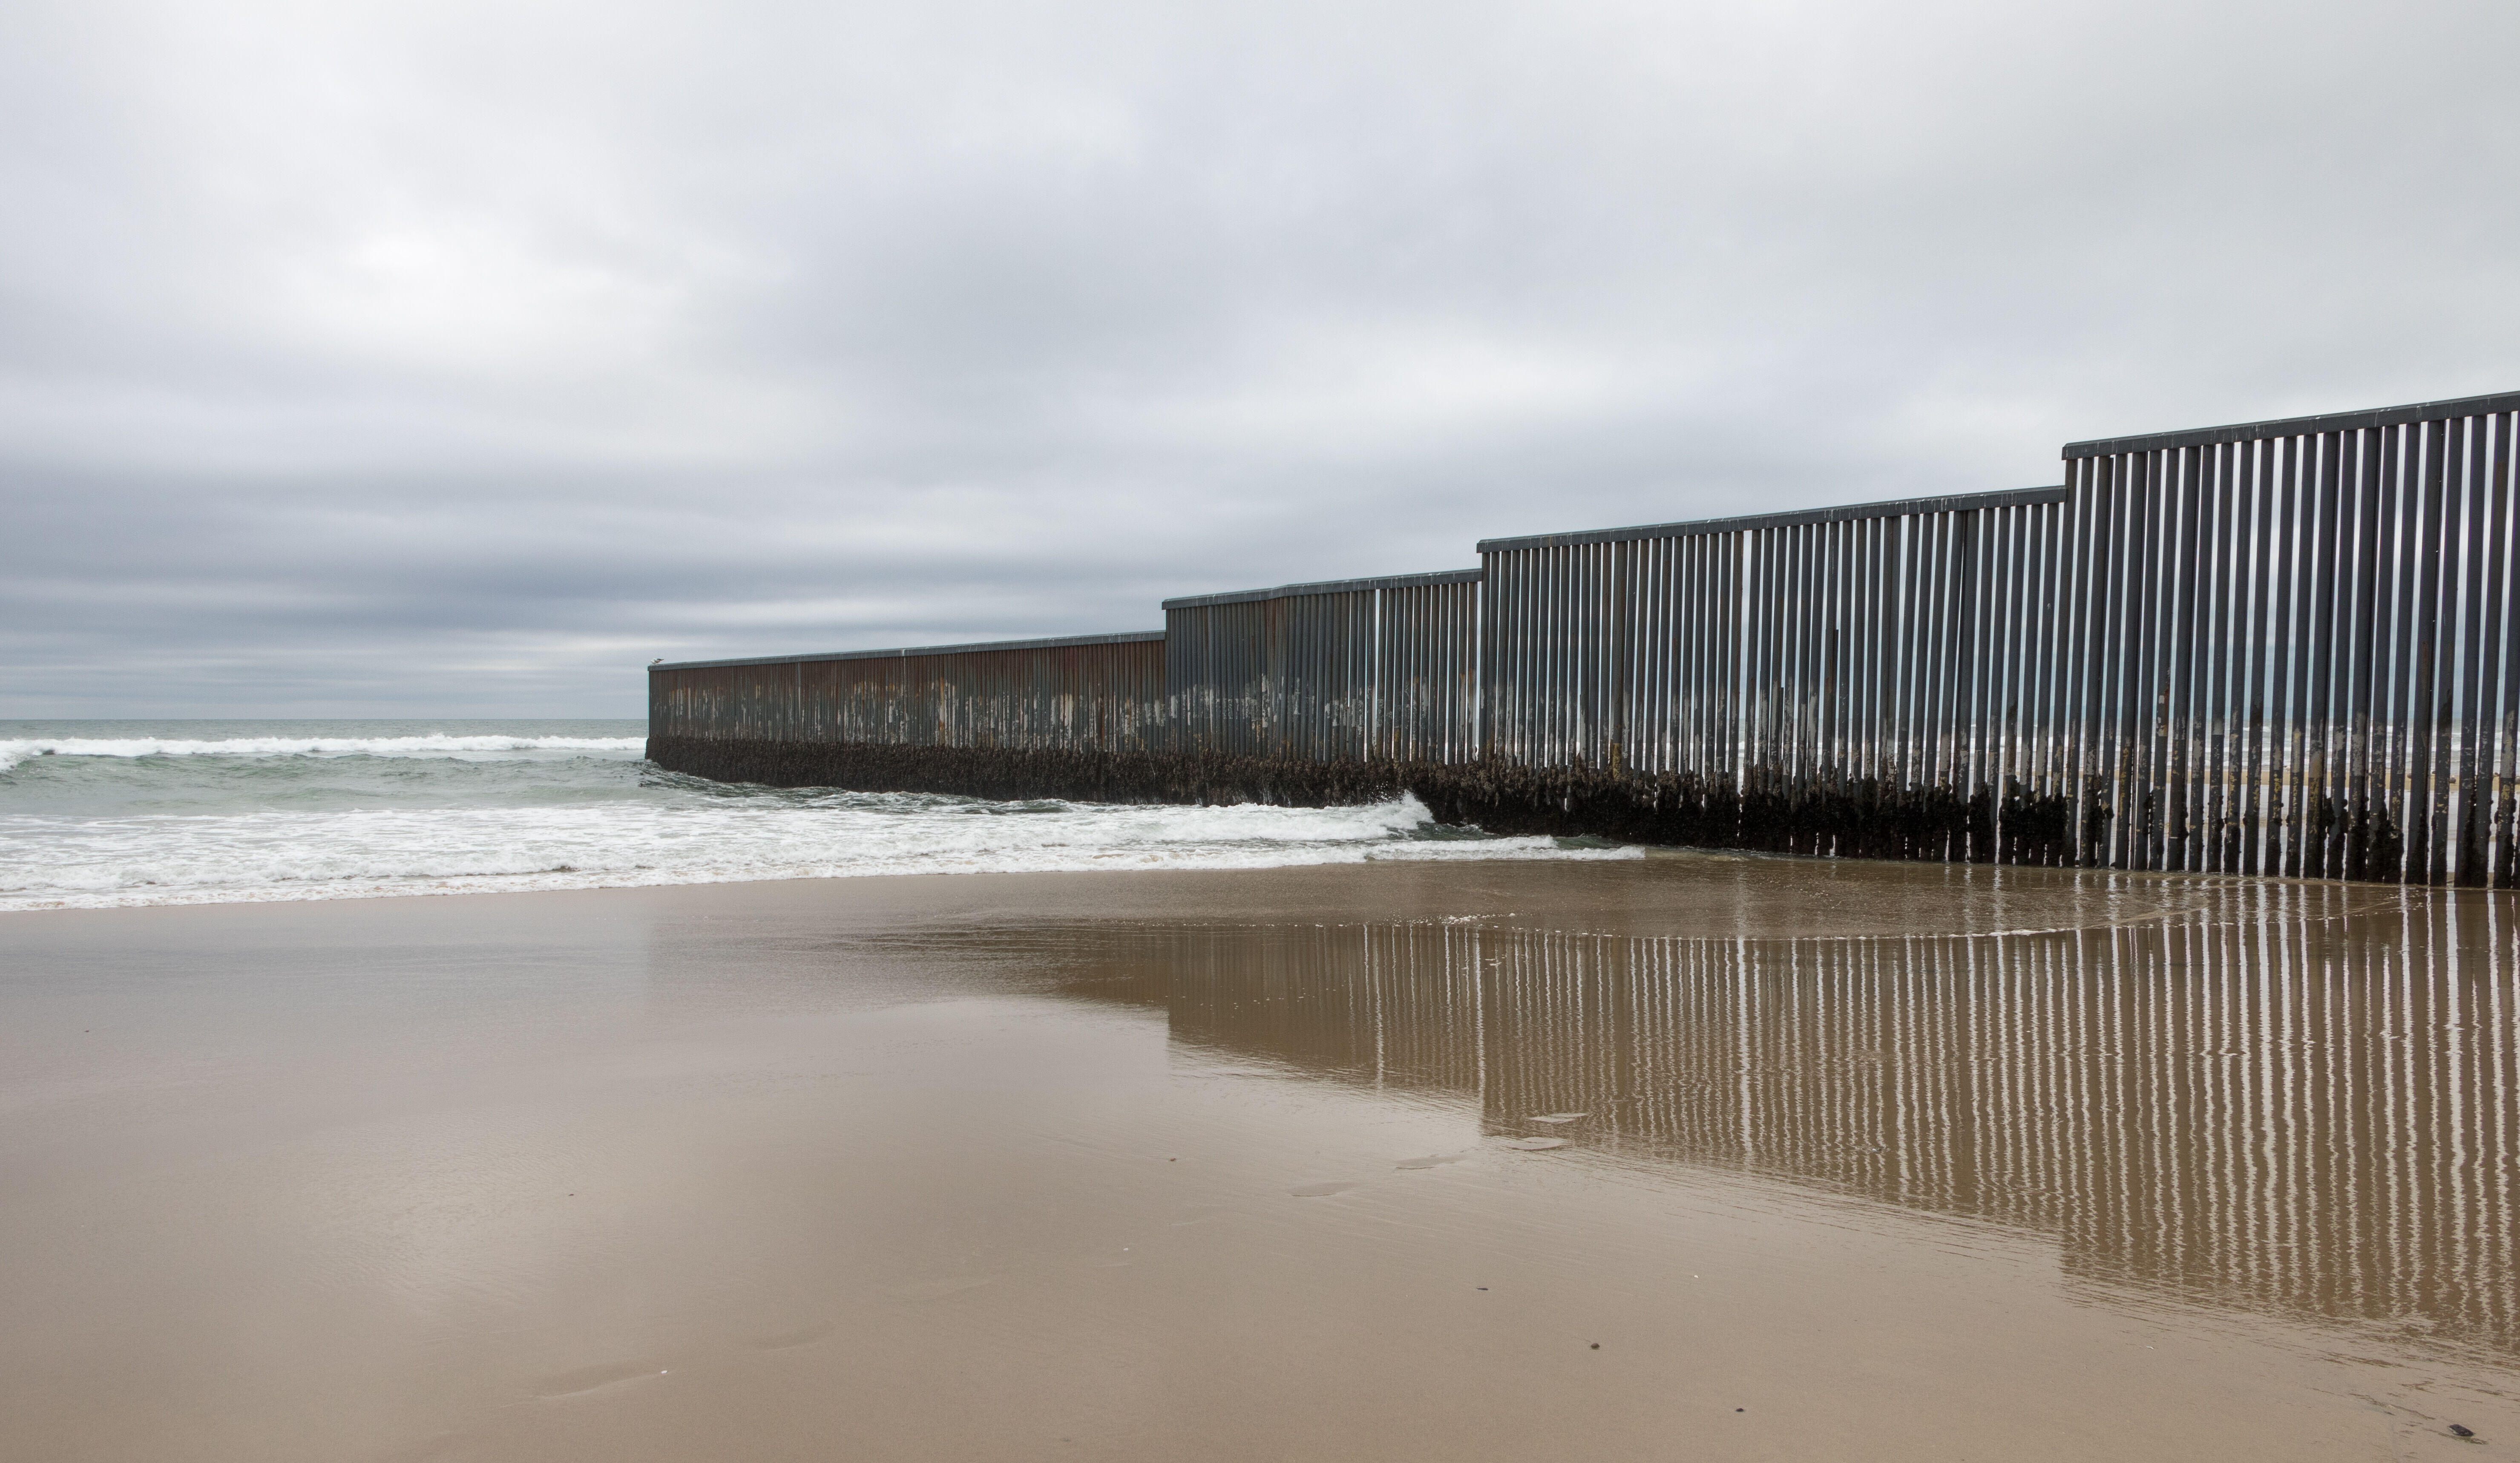 On a beach on the U.S.-Mexico border at Tijuana, Mexico, a border wall extends into the ocean 